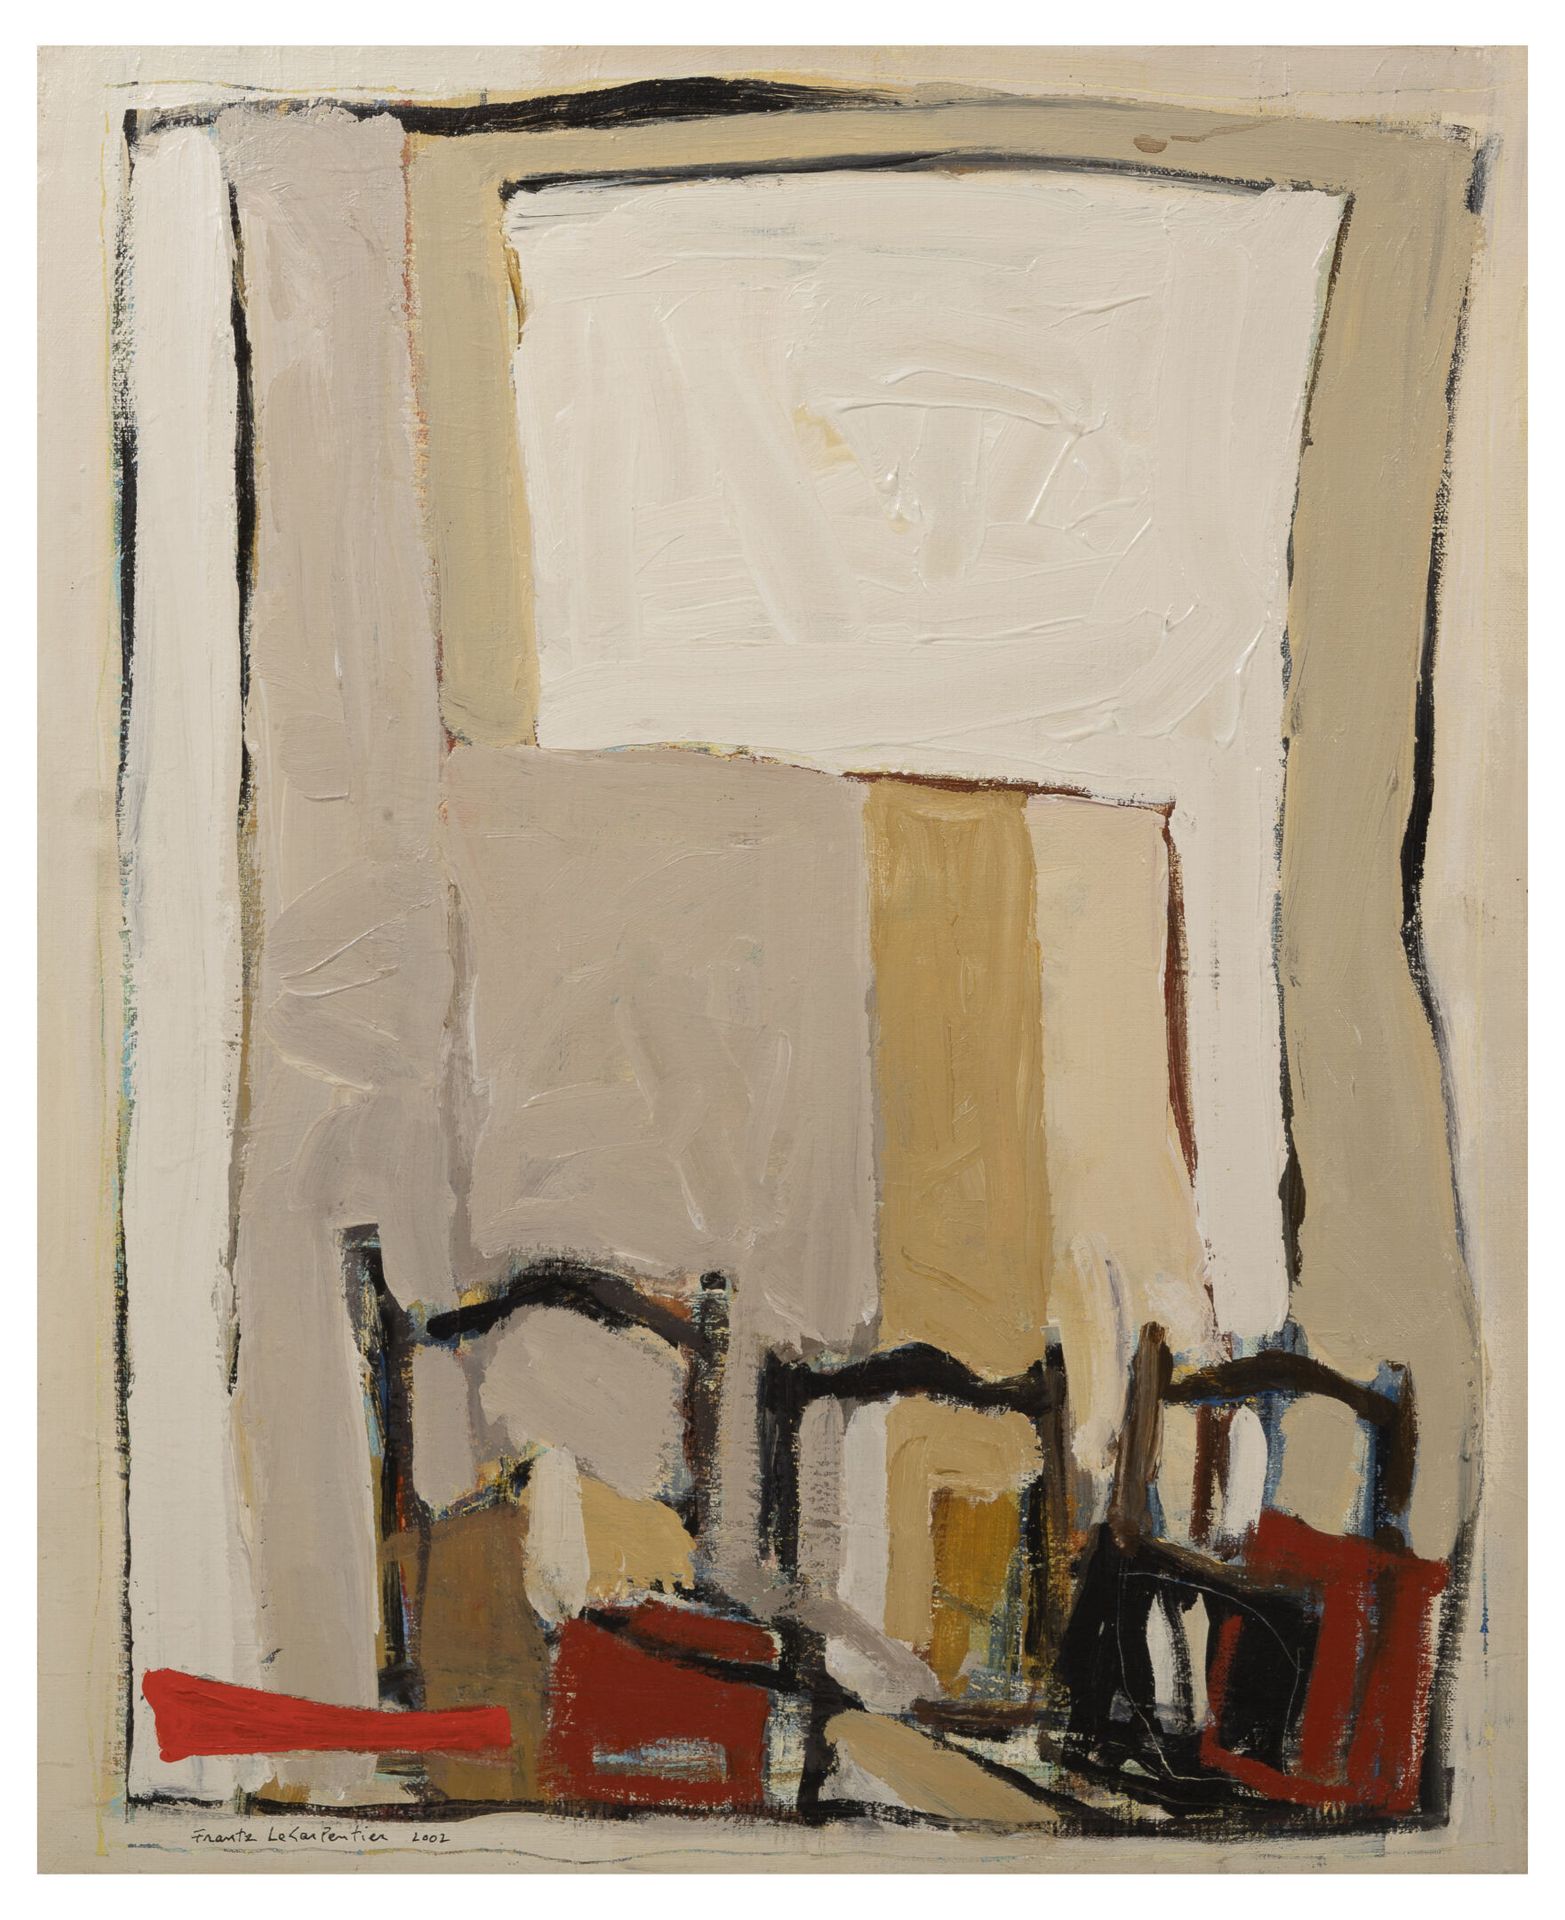 Frantz LE CARPENTIER (1961) 无题》，2002年。

布面油画。

左下方有签名和日期。

61 x 50厘米。